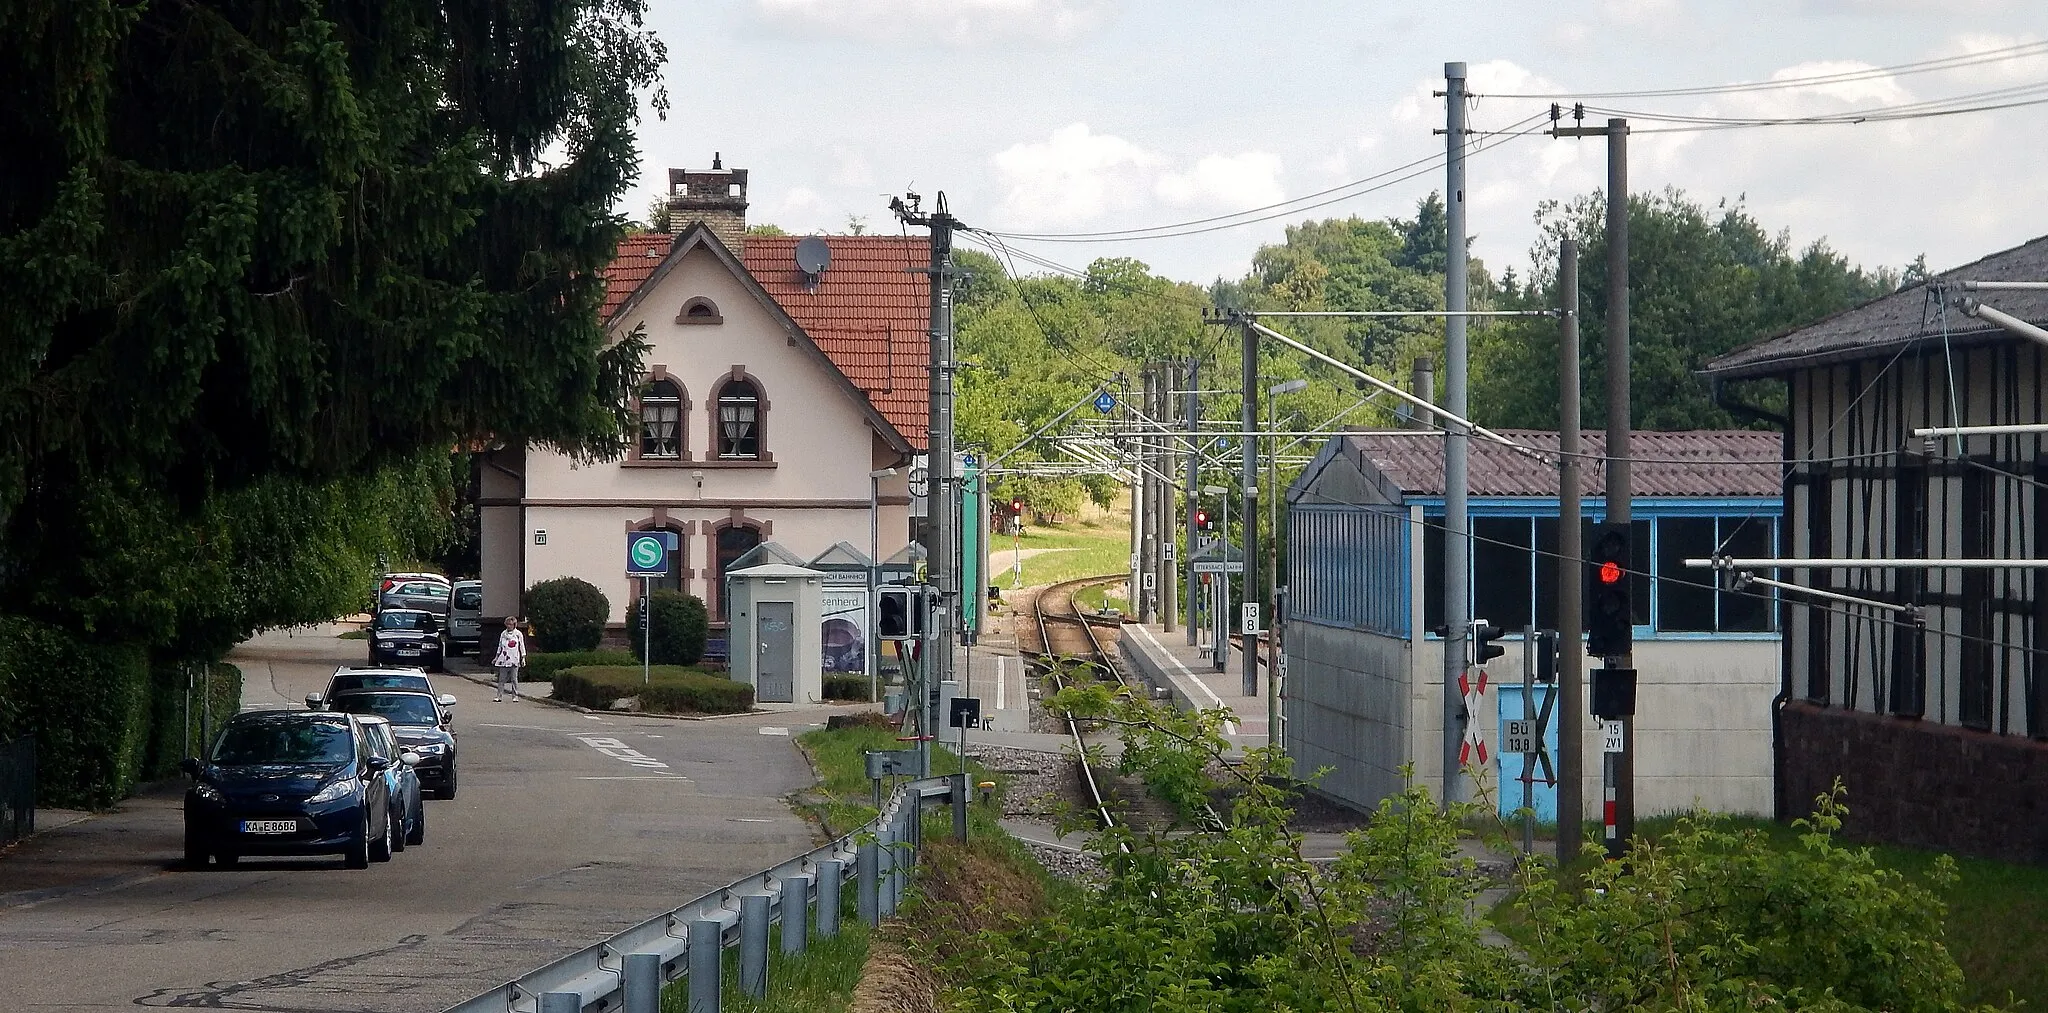 Photo showing: Bahnhof der Stadtbahn S 11 in Ittersbach